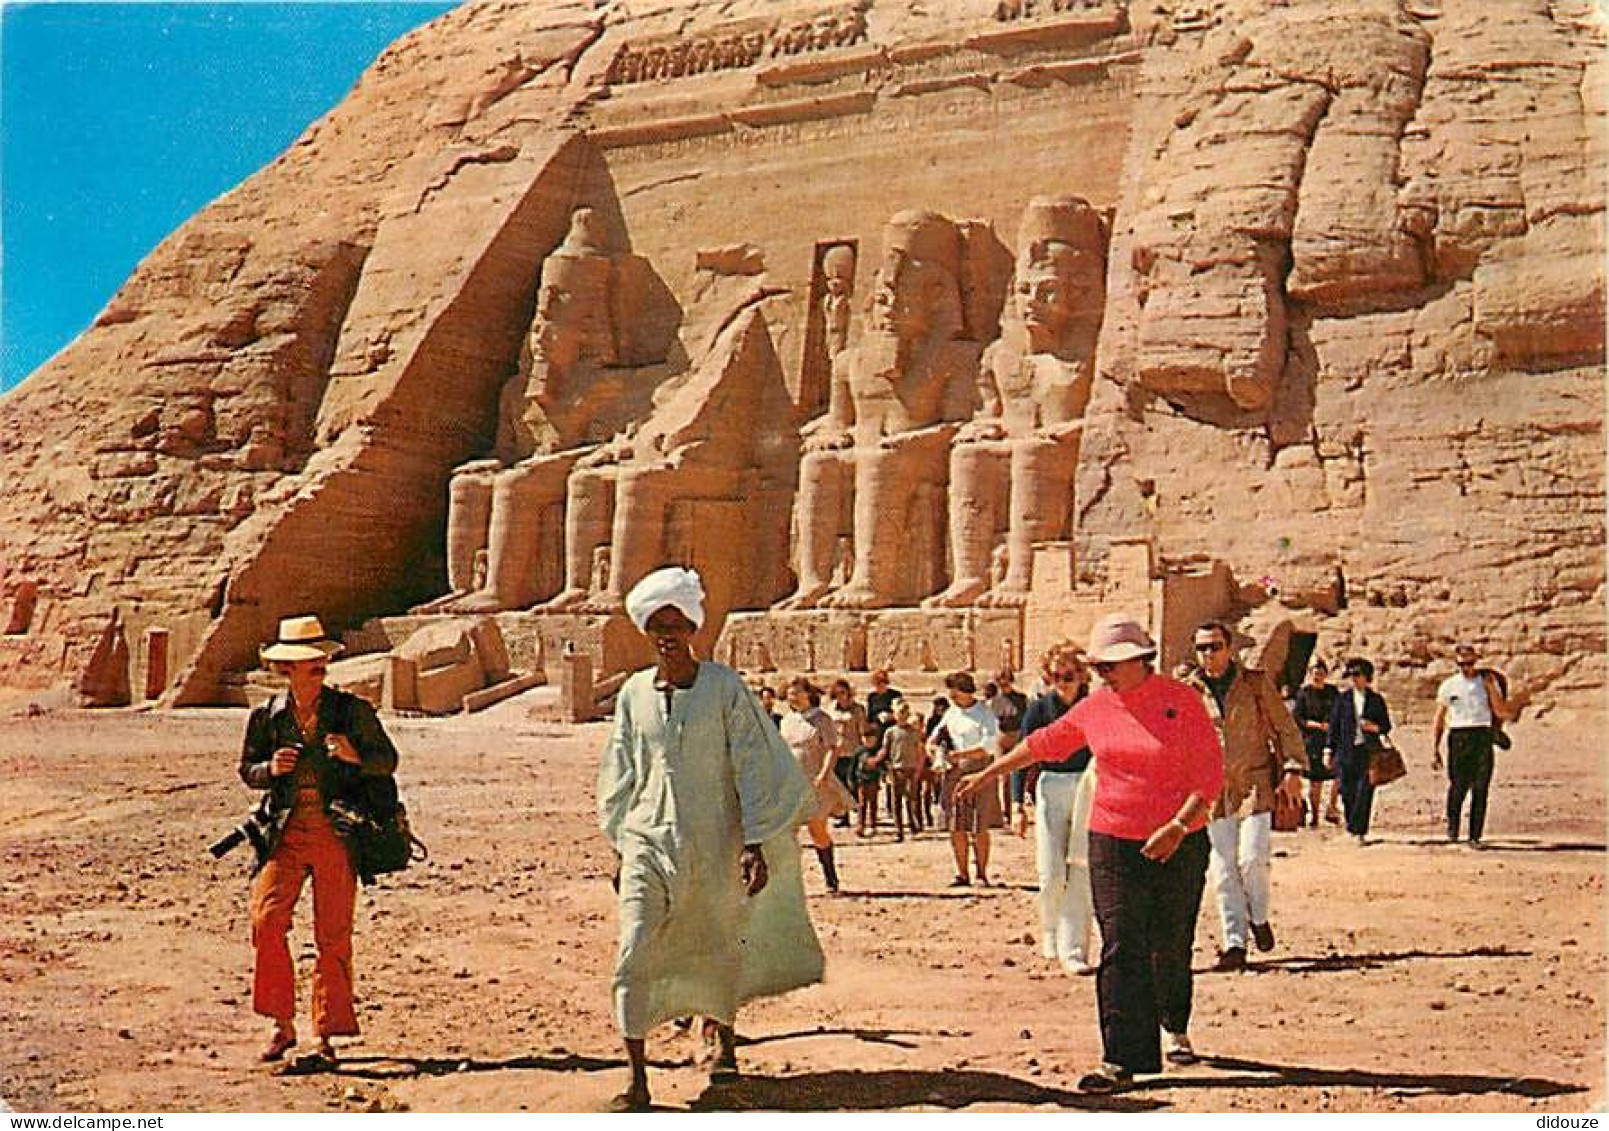 Egypte - Temples D'Abou Simbel - Abu Simbel - Abou Simbel Rock Temple Of Ramses II - Partial View Of The Gigantic Statue - Abu Simbel Temples